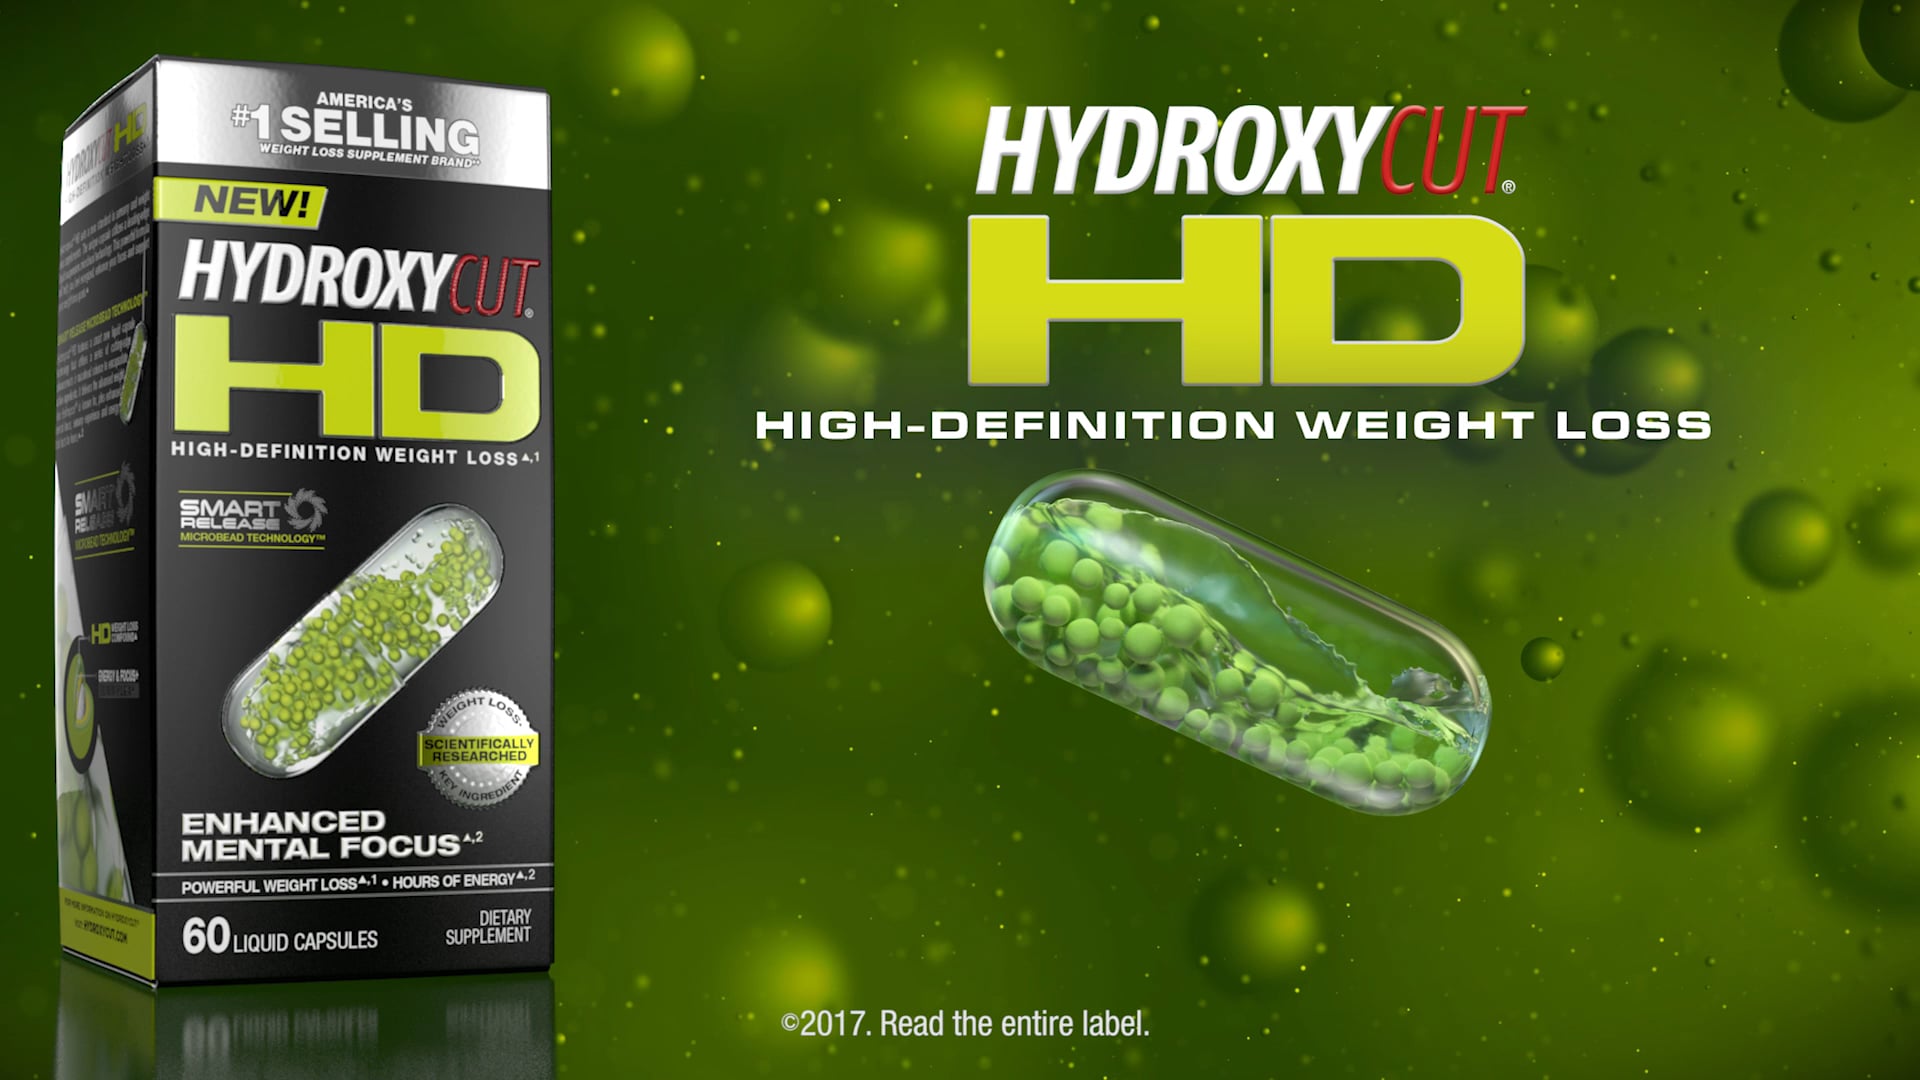 Hydroxycut HD Commercial